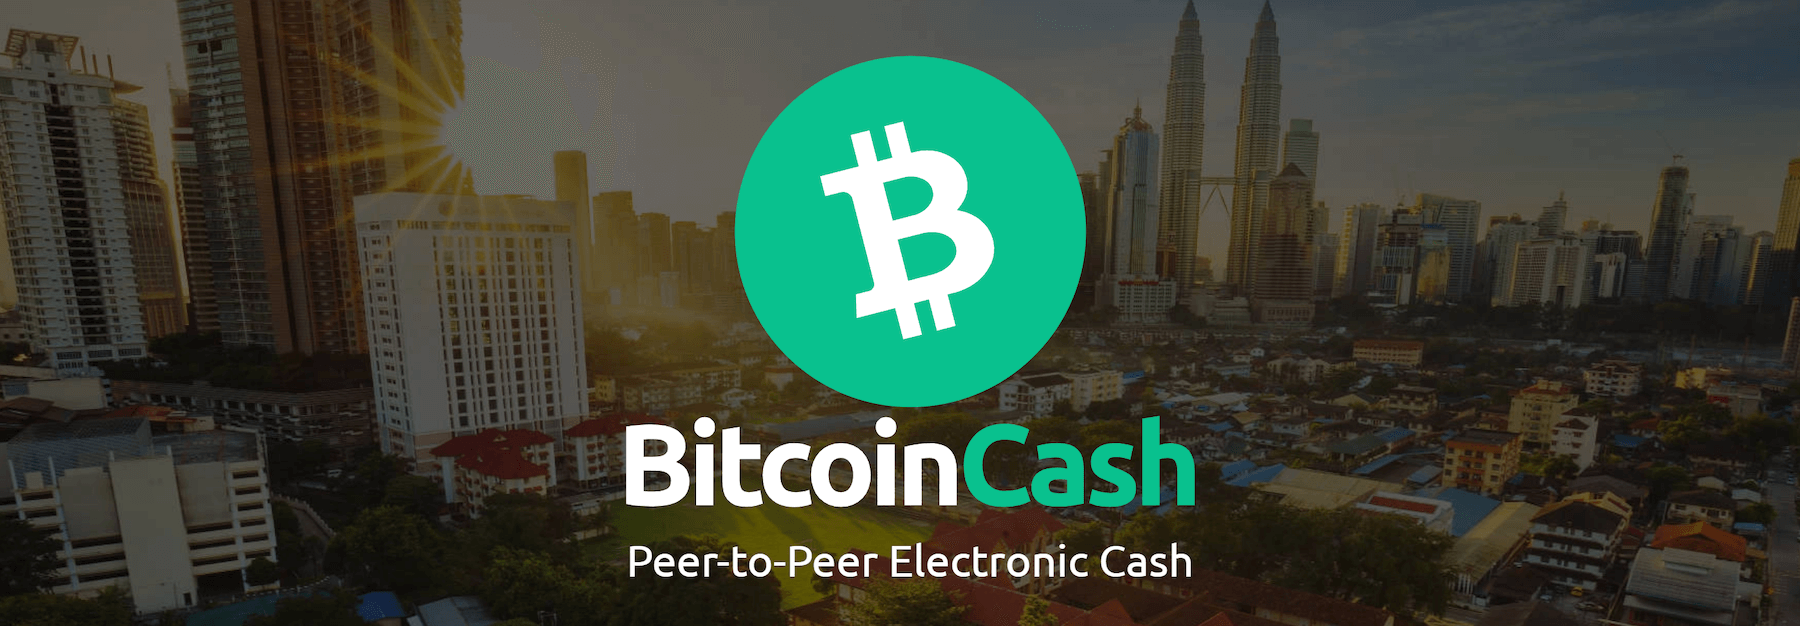 Майнинг Bitcoin Cash. Логотип Bitcoin Cash. Фото.